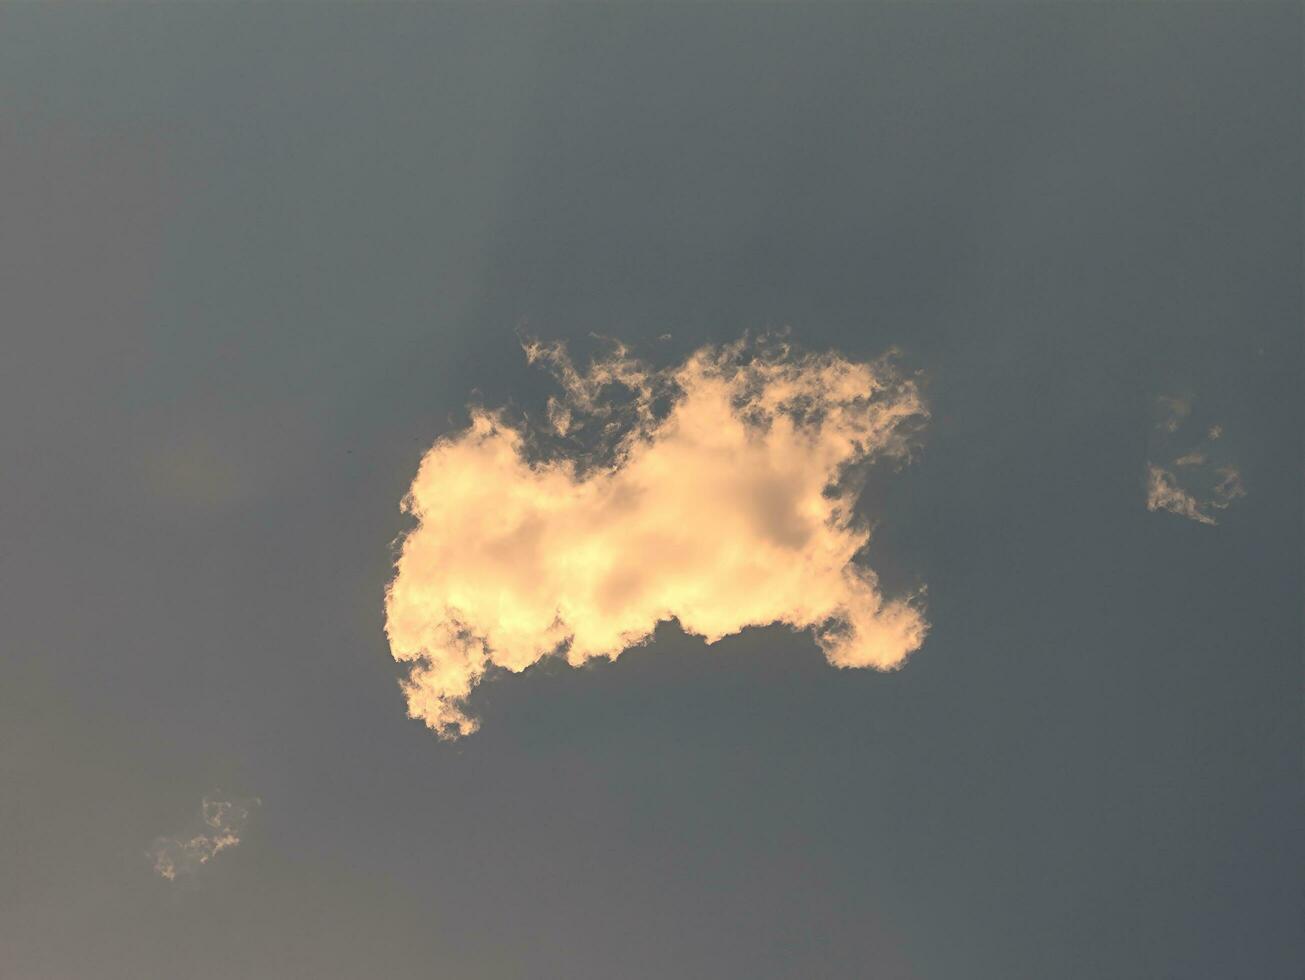 Single cloud in the sky, cloud shape photo